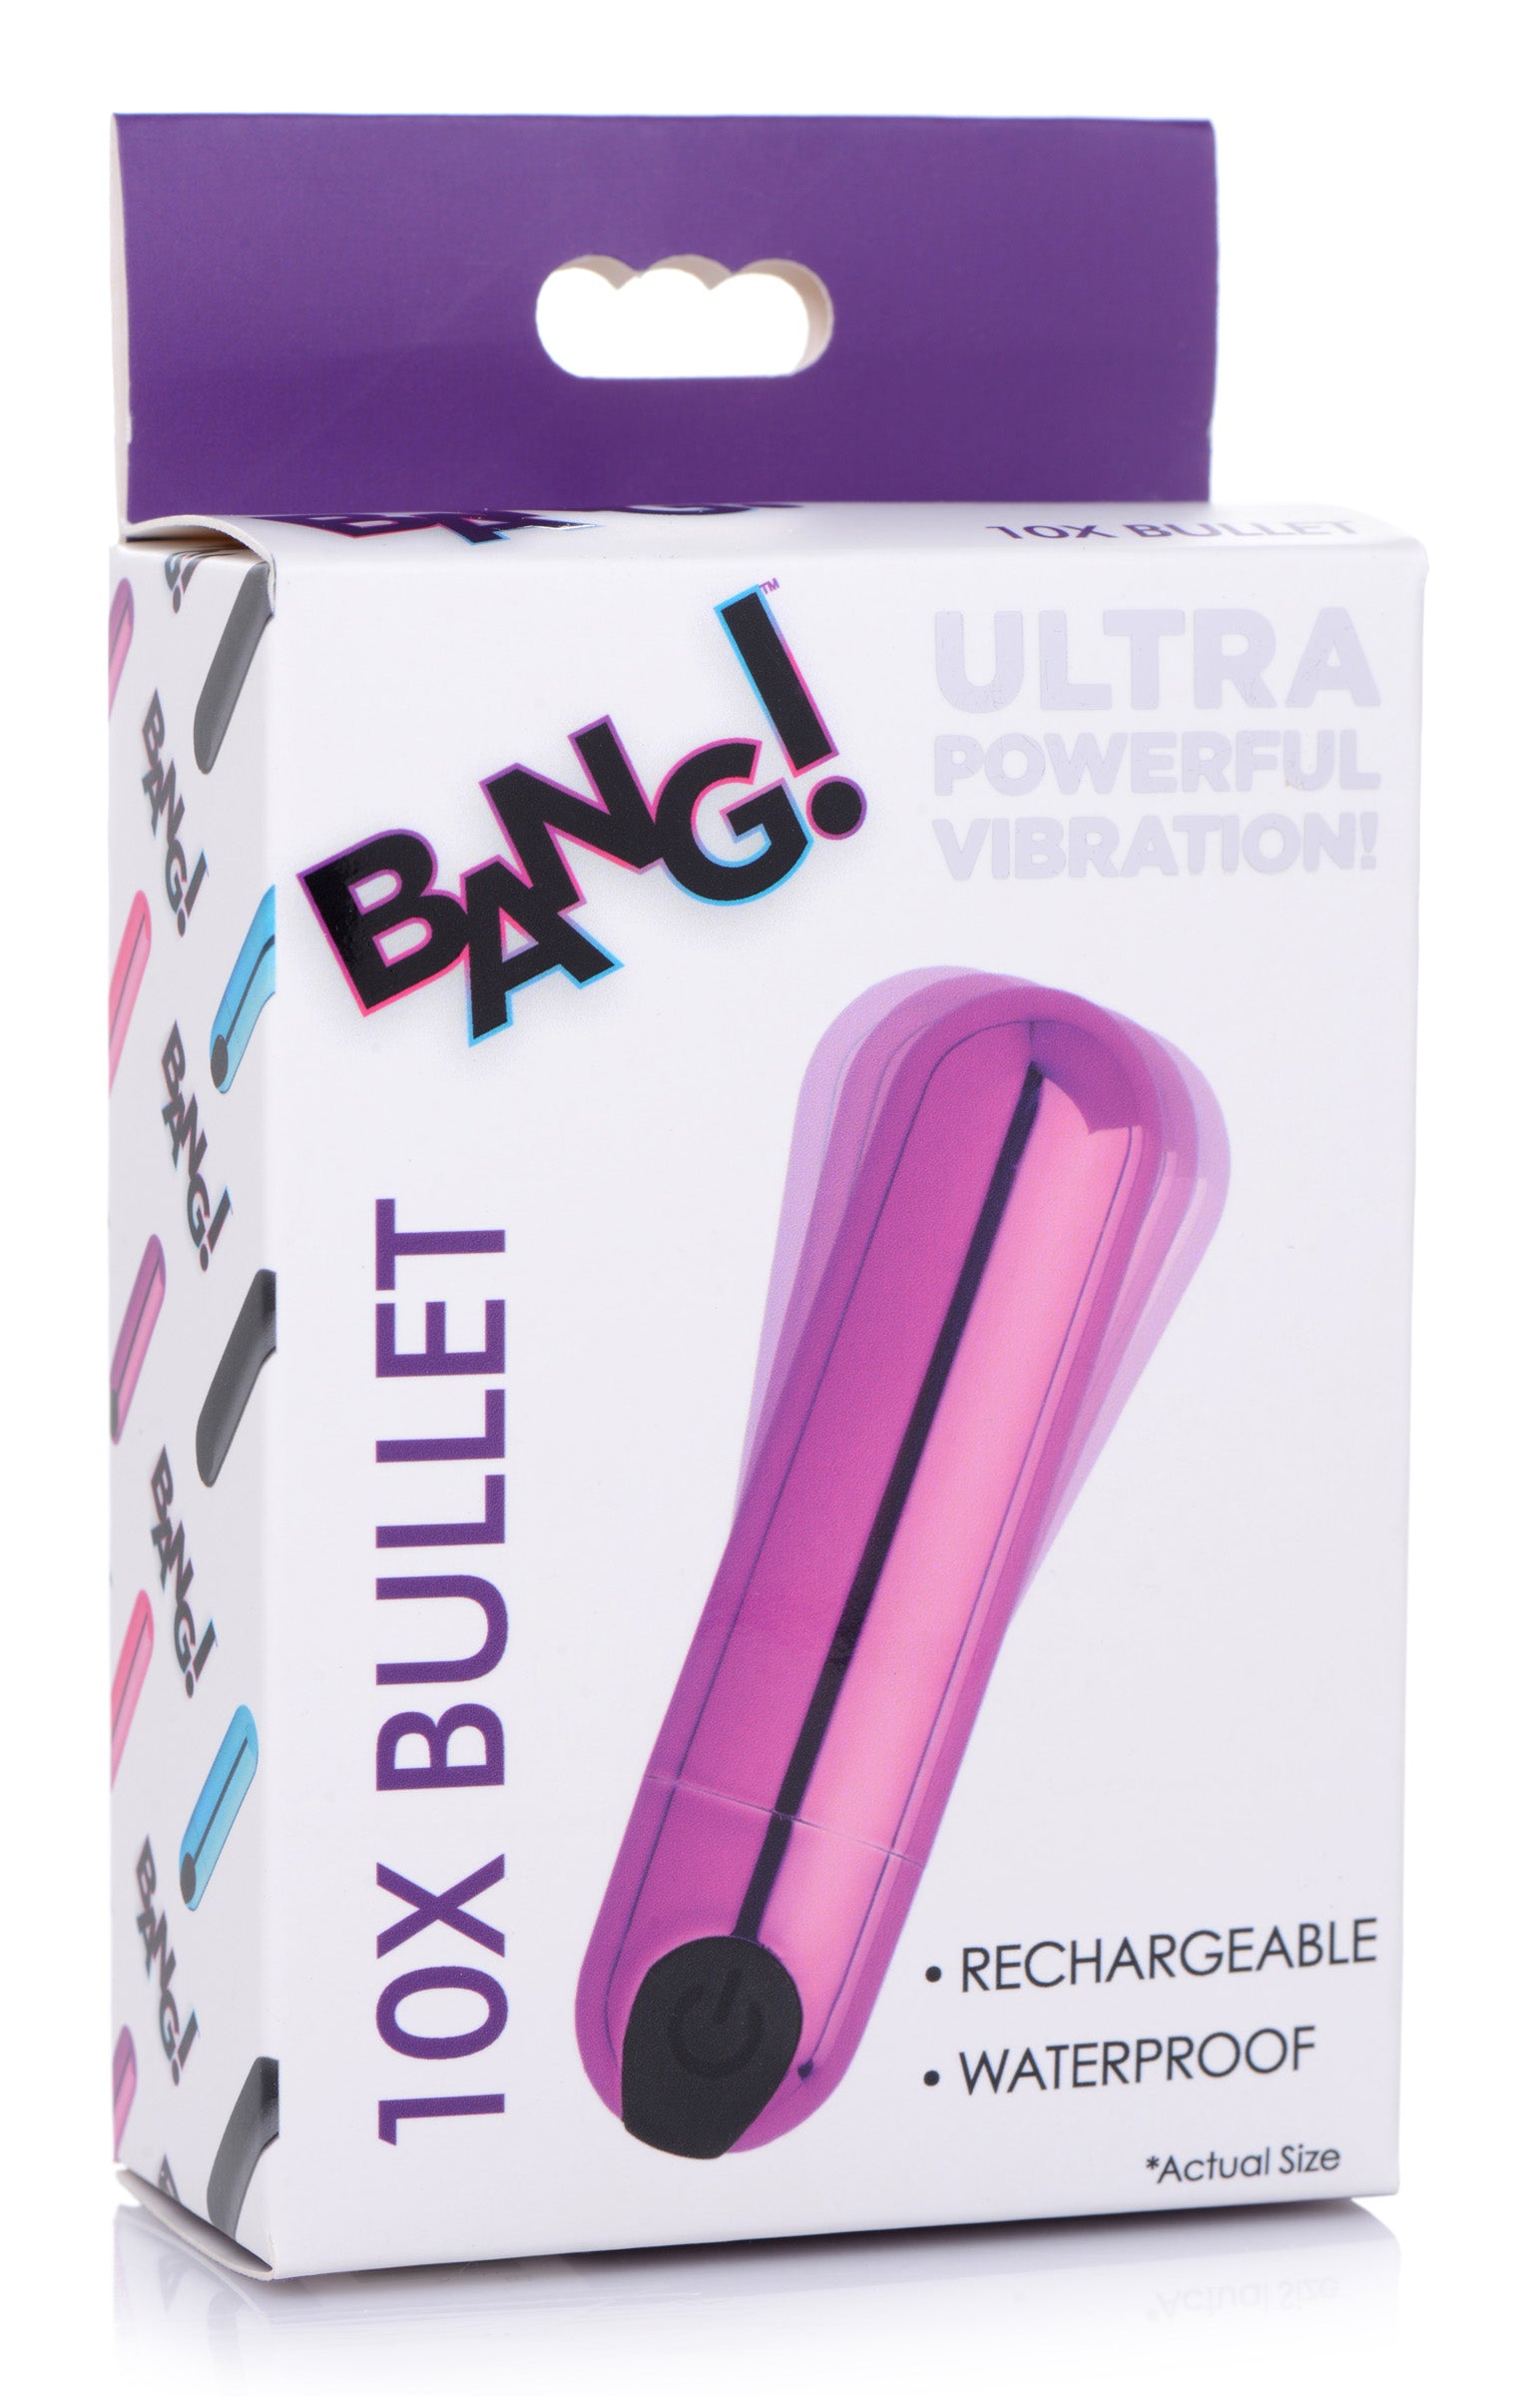 10X Rechargeable Vibrating Metallic Bullet - Purple - UABDSM